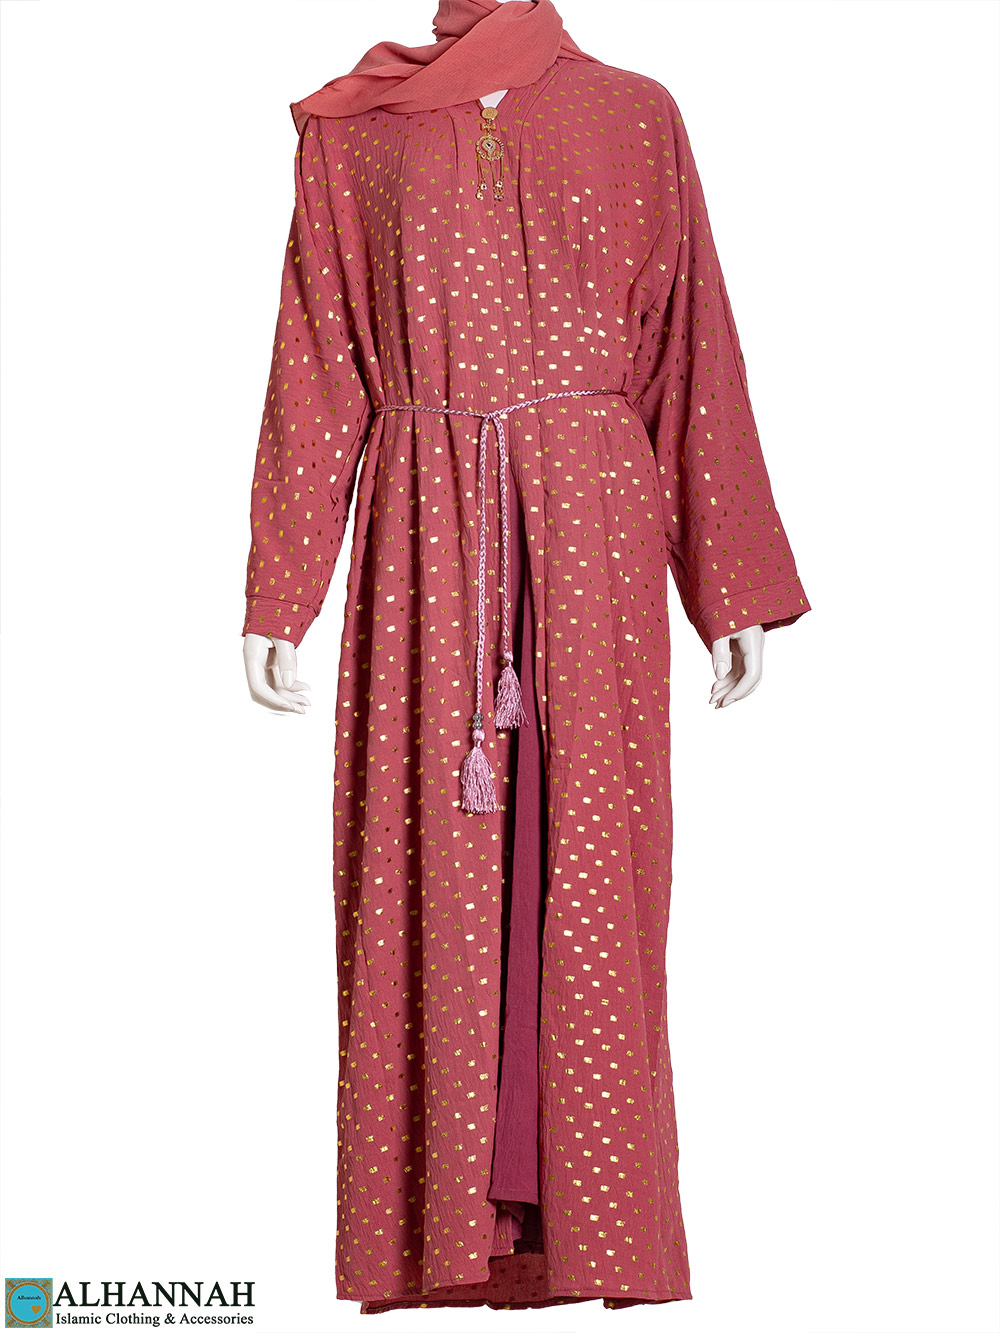 2 Layer Abaya - Coral | ab850 | Alhannah Islamic Clothing